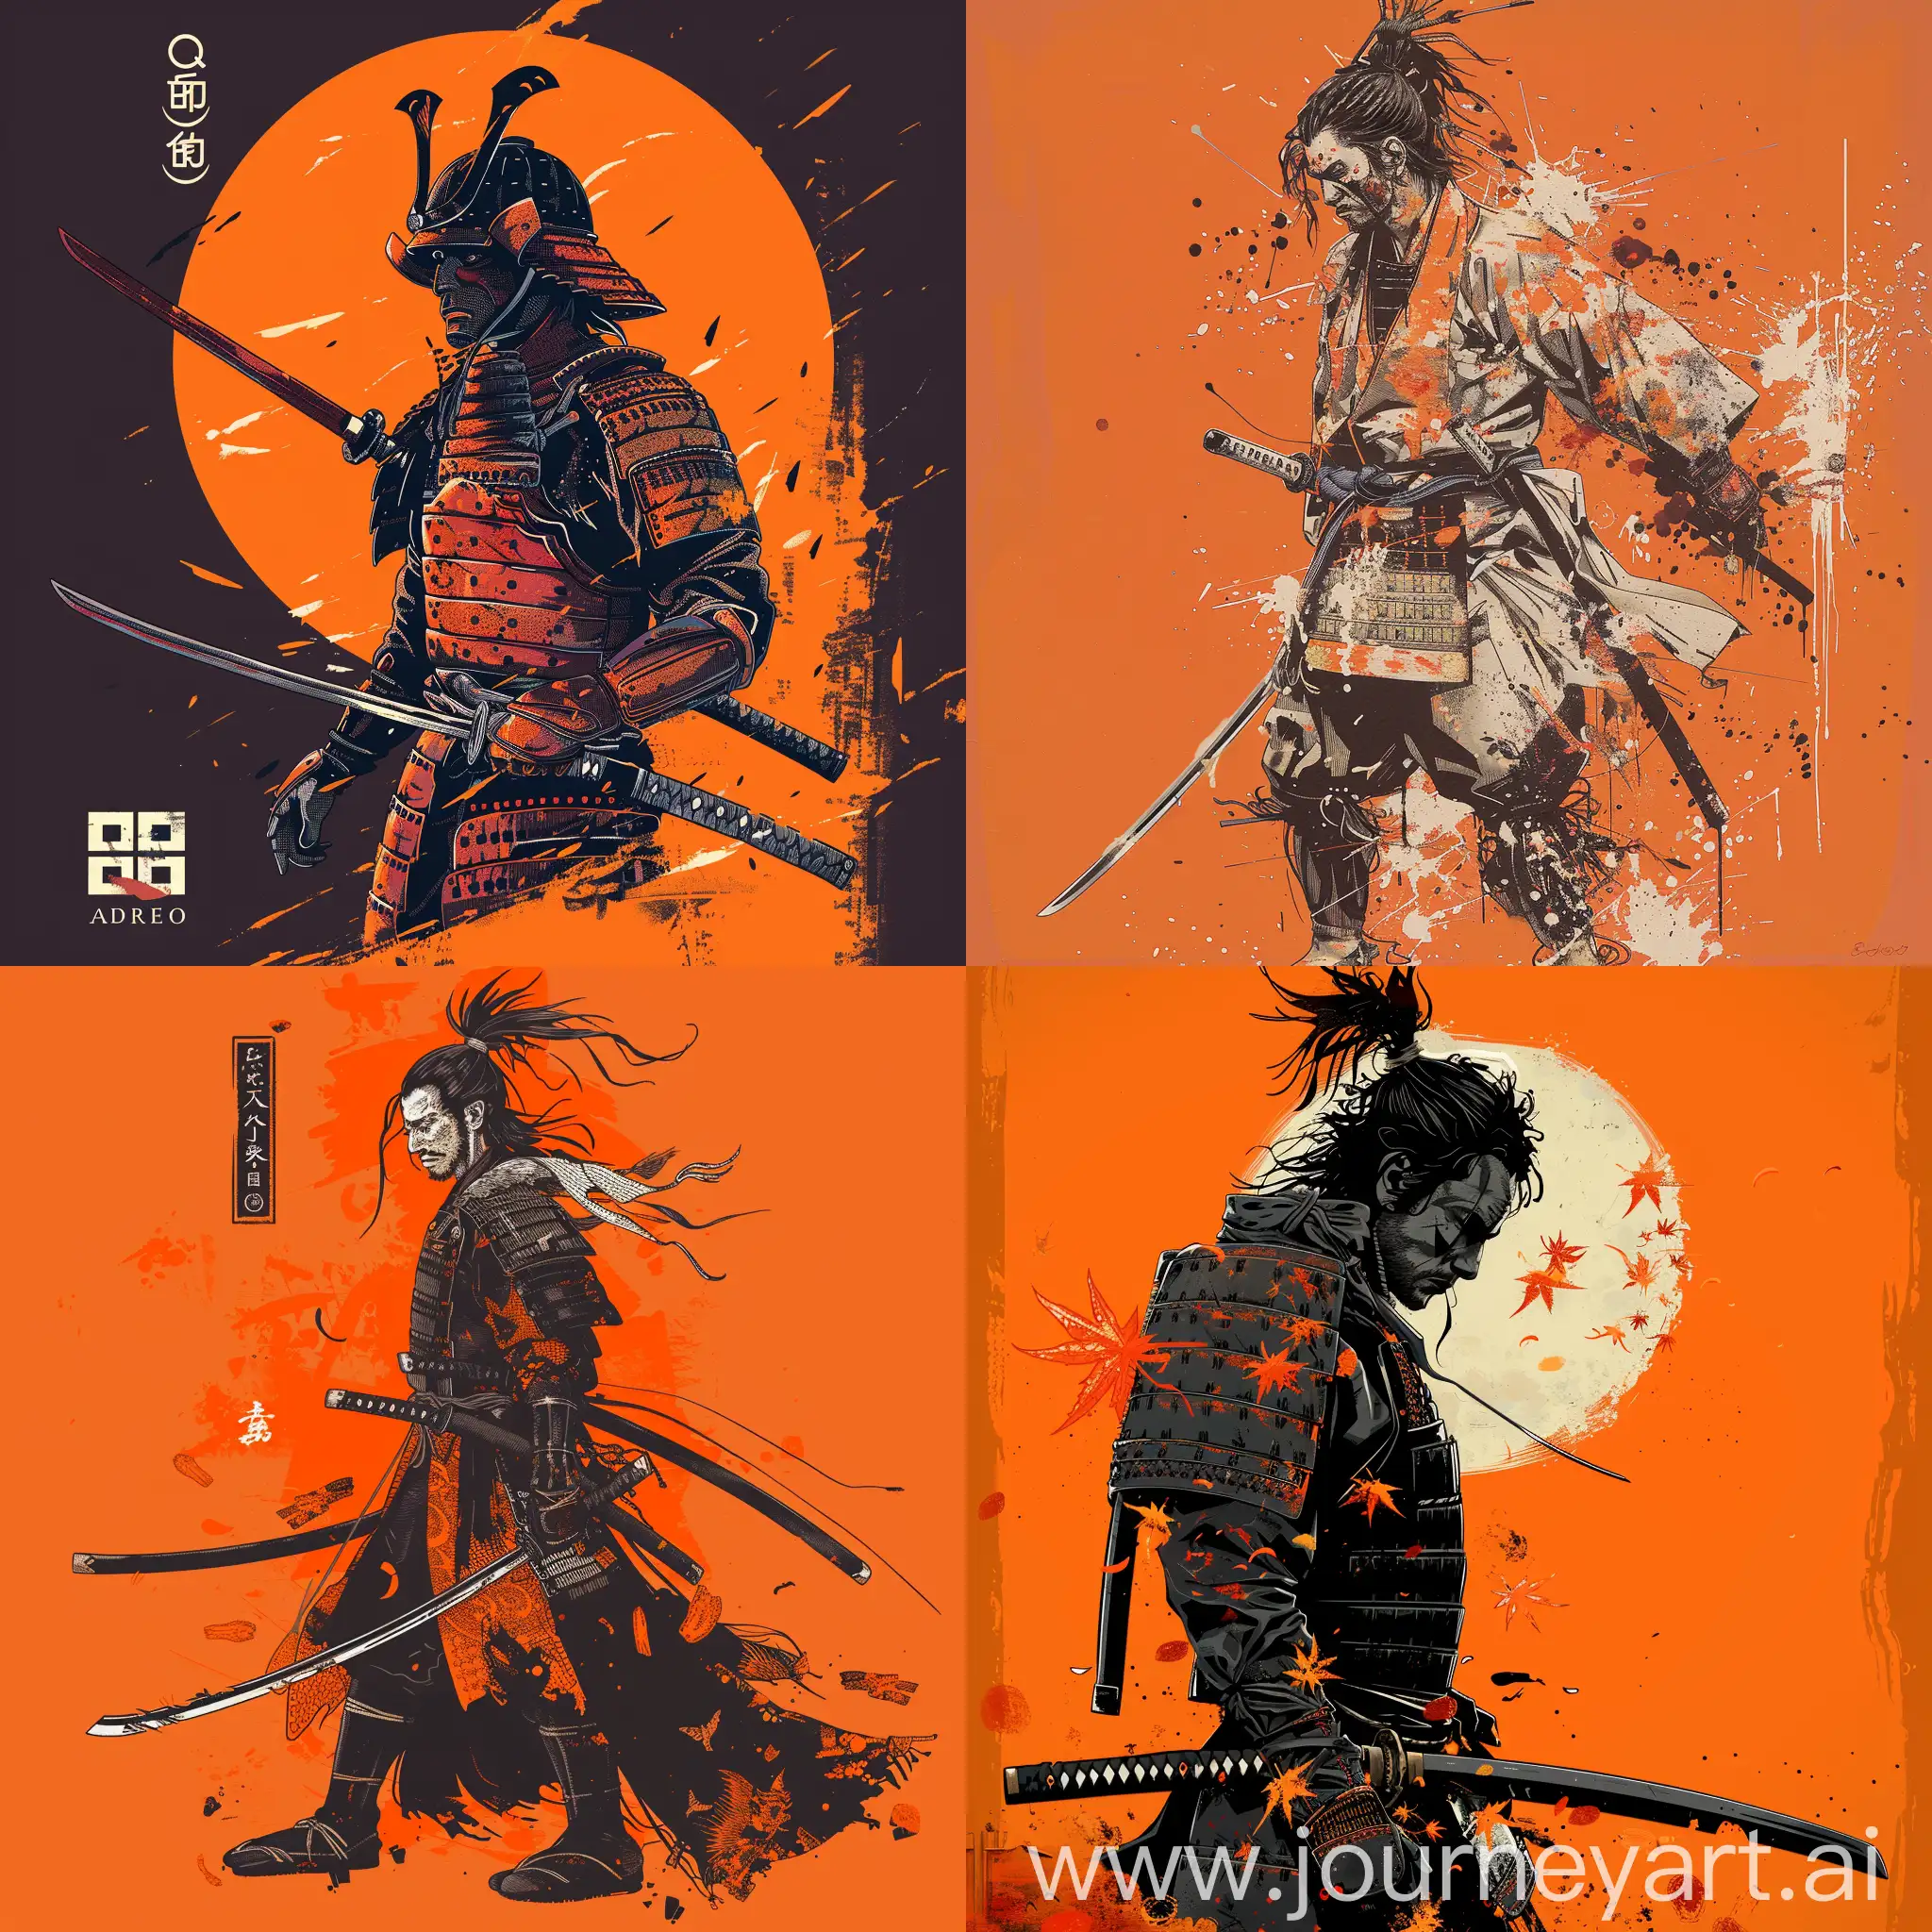 qizen samurai with orange background